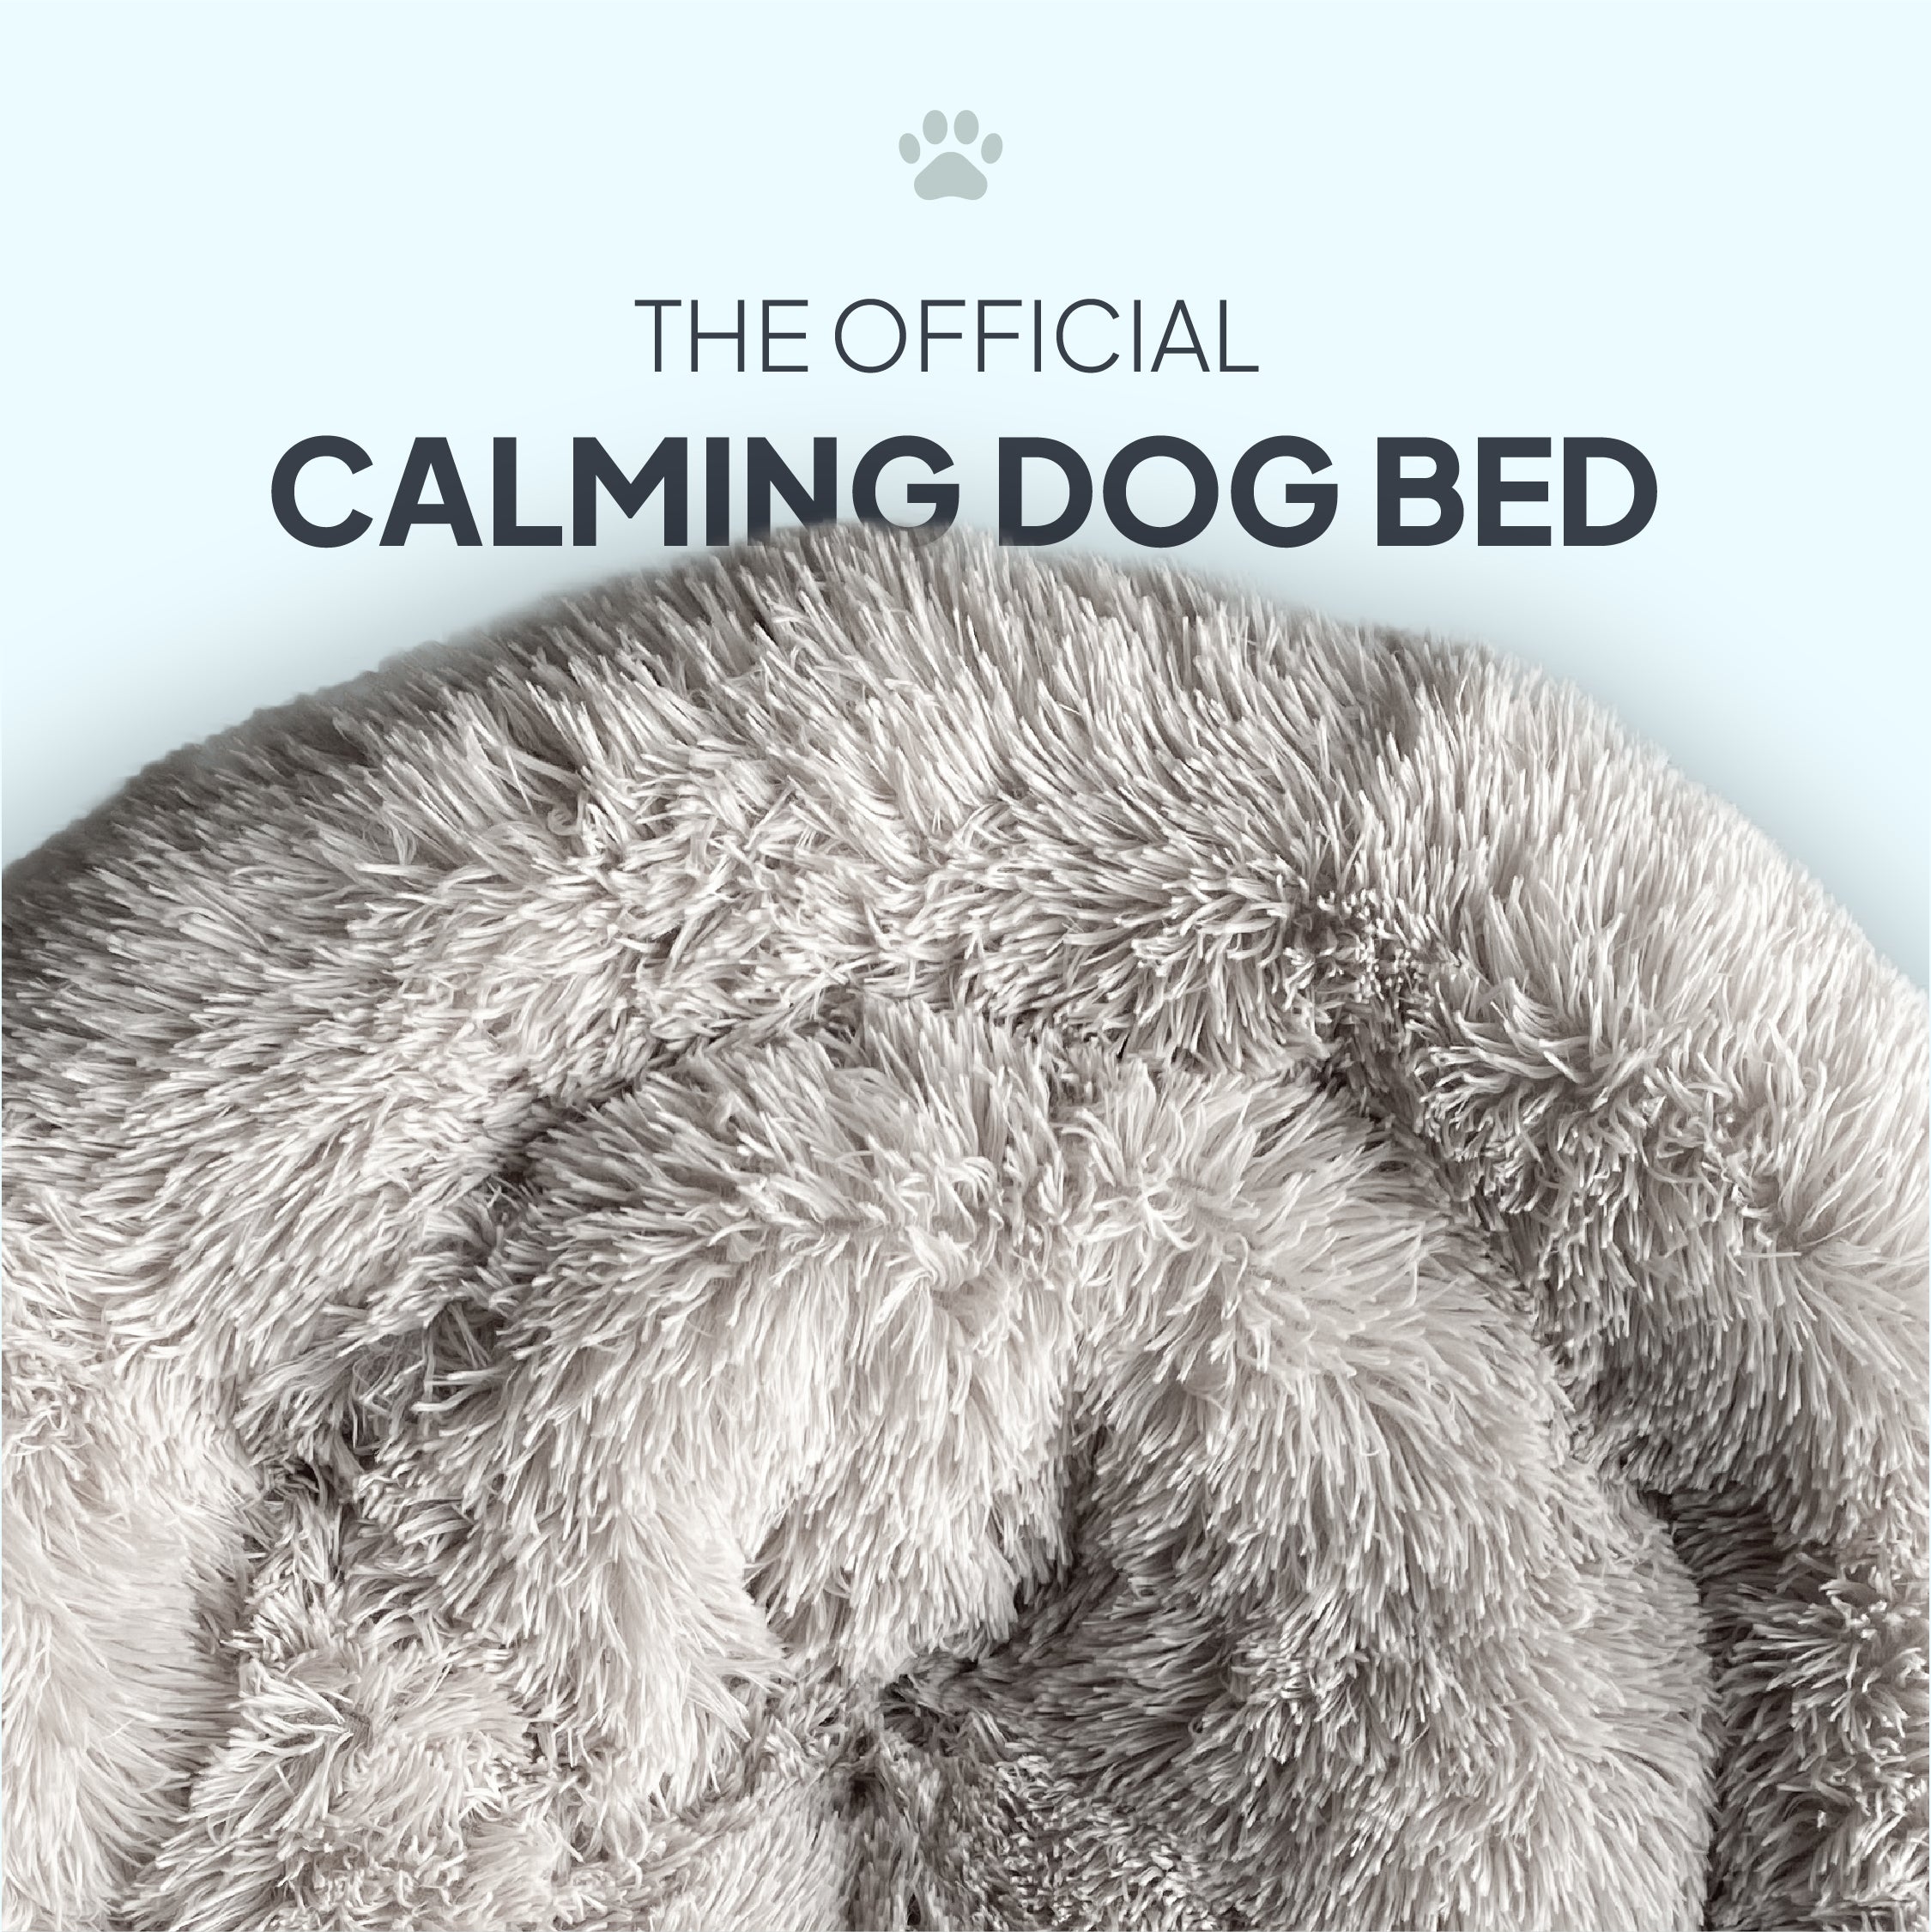 THE ORIGINAL CALMING DOG BED